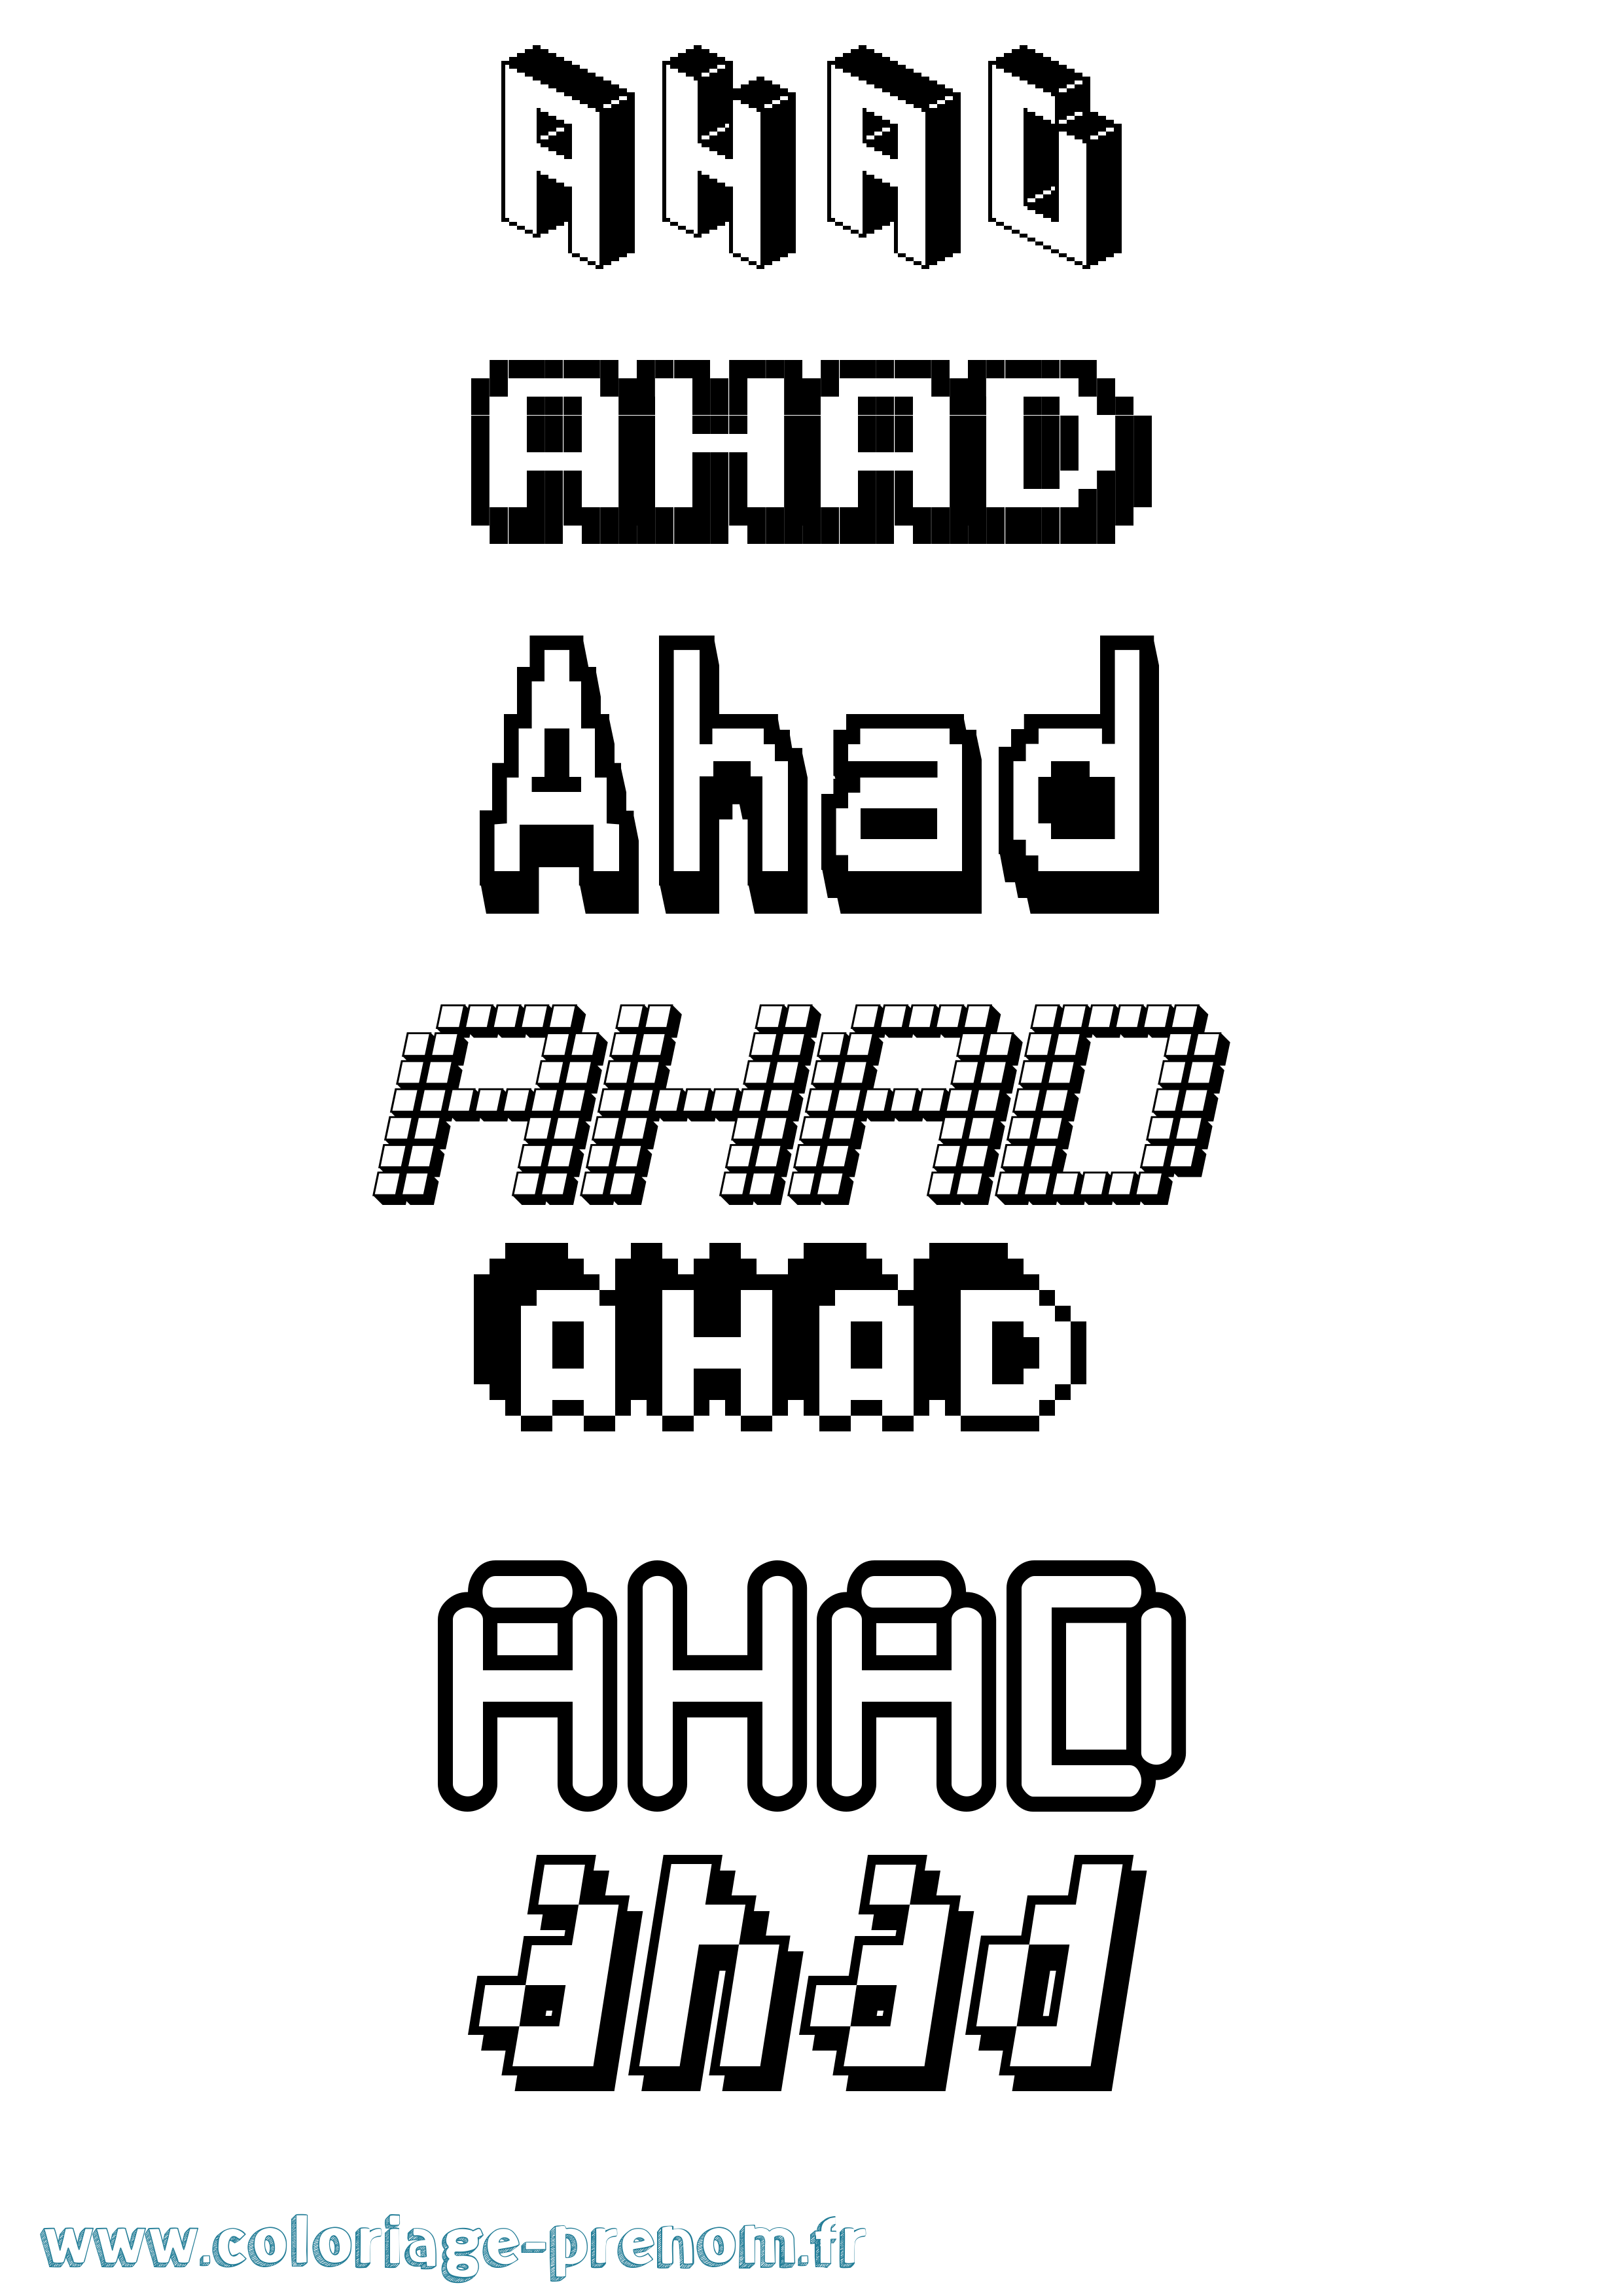 Coloriage prénom Ahad Pixel